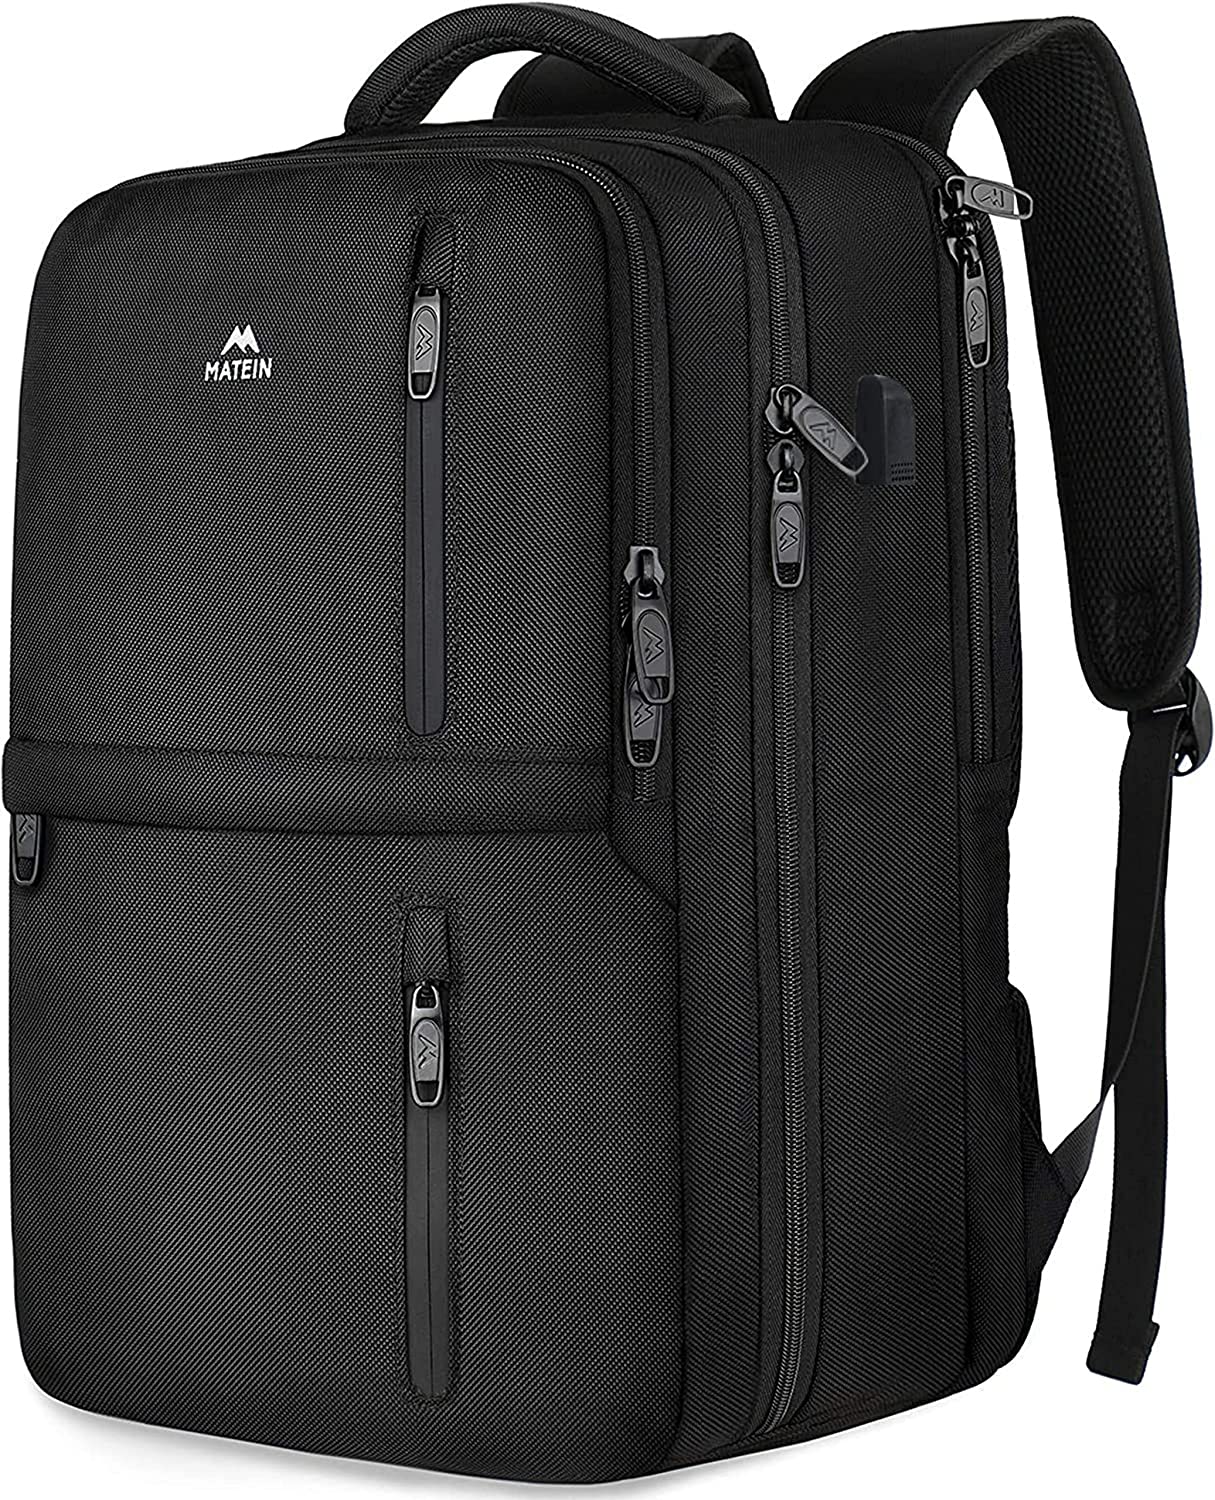 Best Travel Backpack